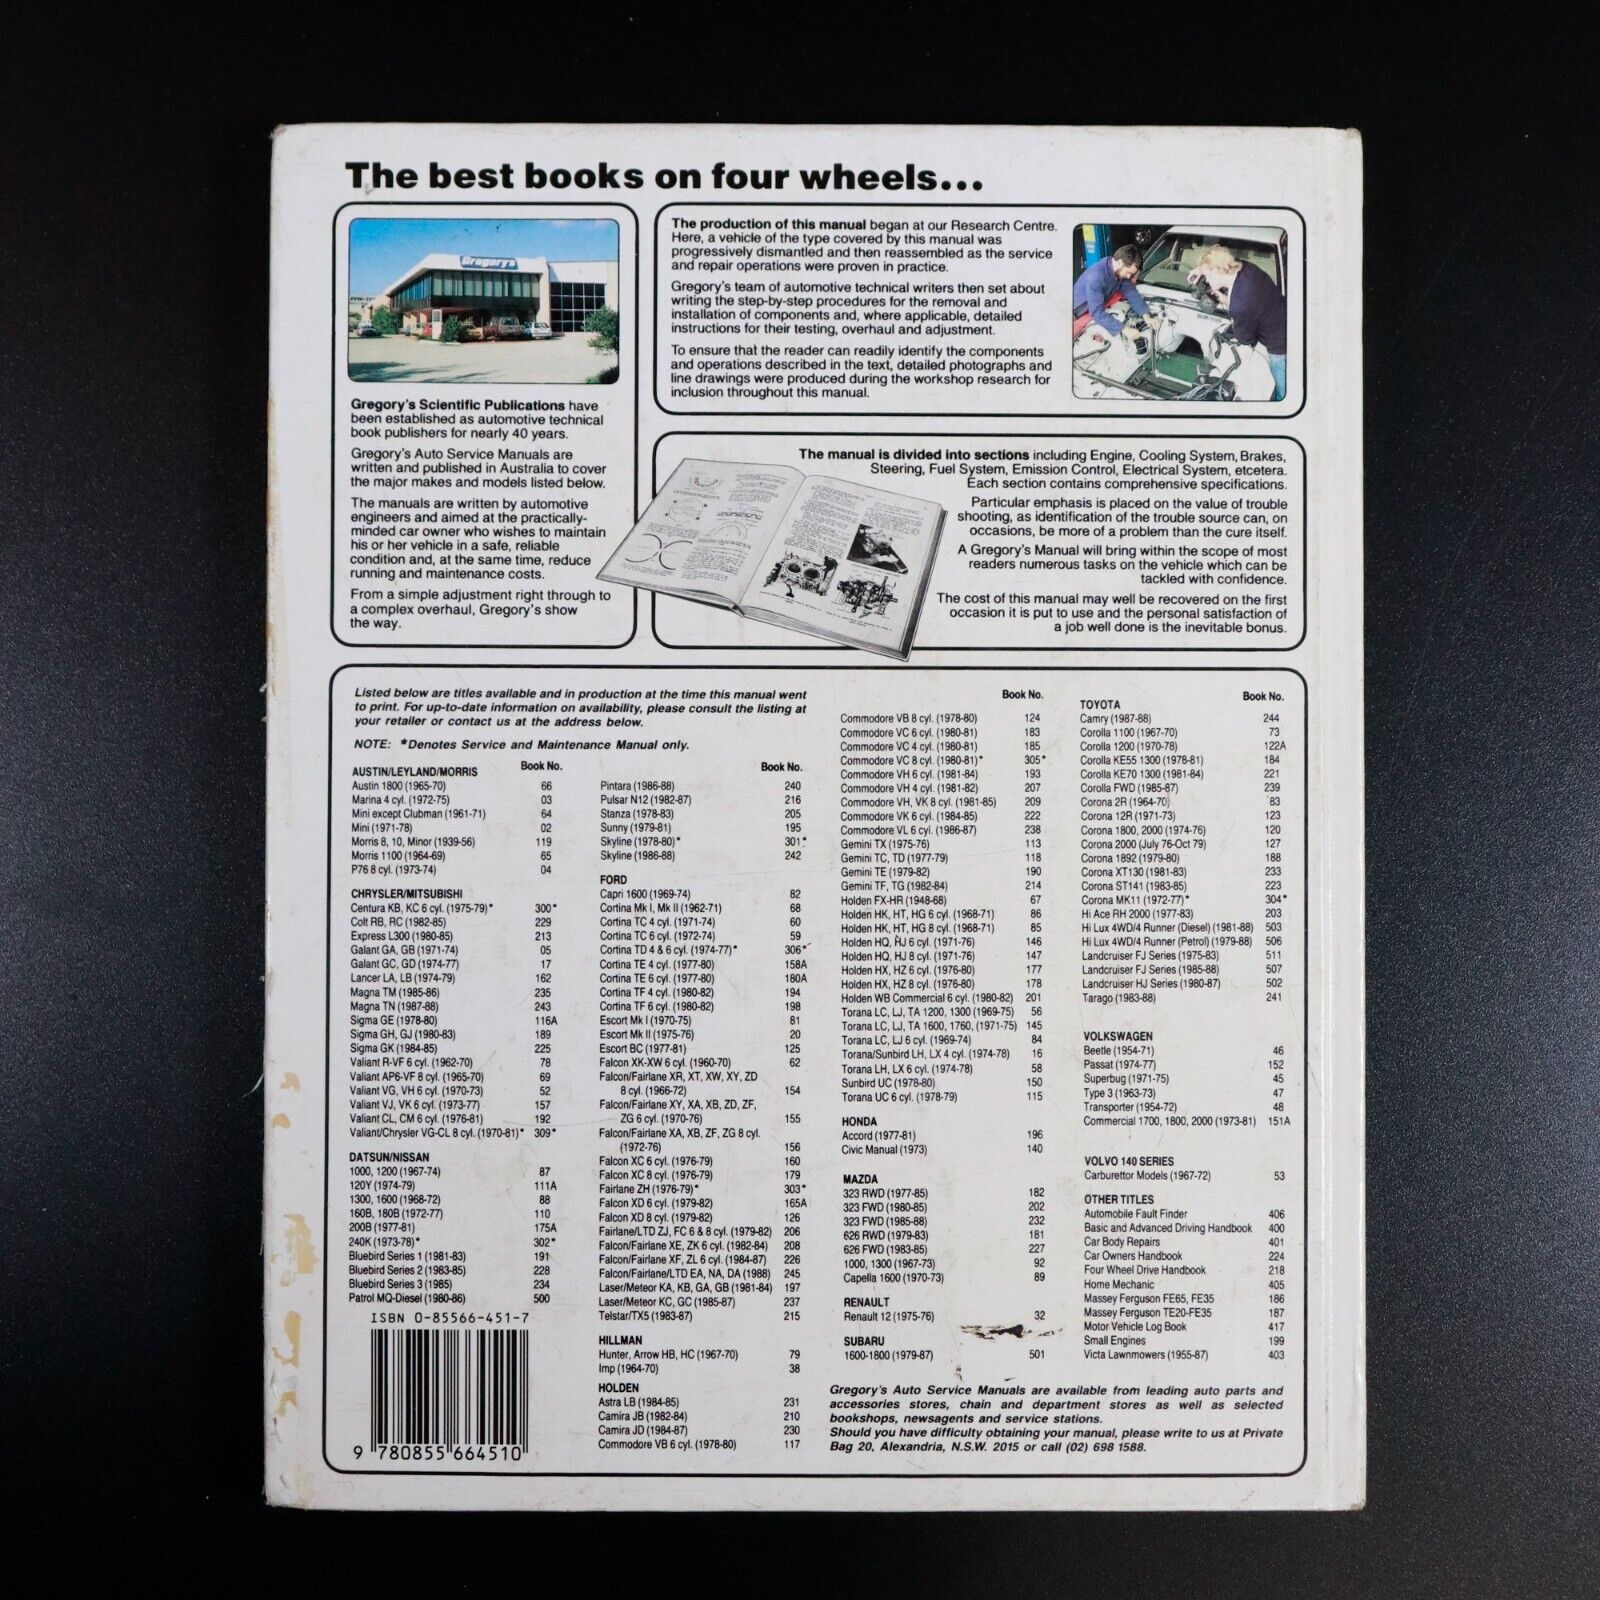 1989 Gregory's No. 126 Ford Falcon Fairmont XD Series V8 Car Repair Manual Book